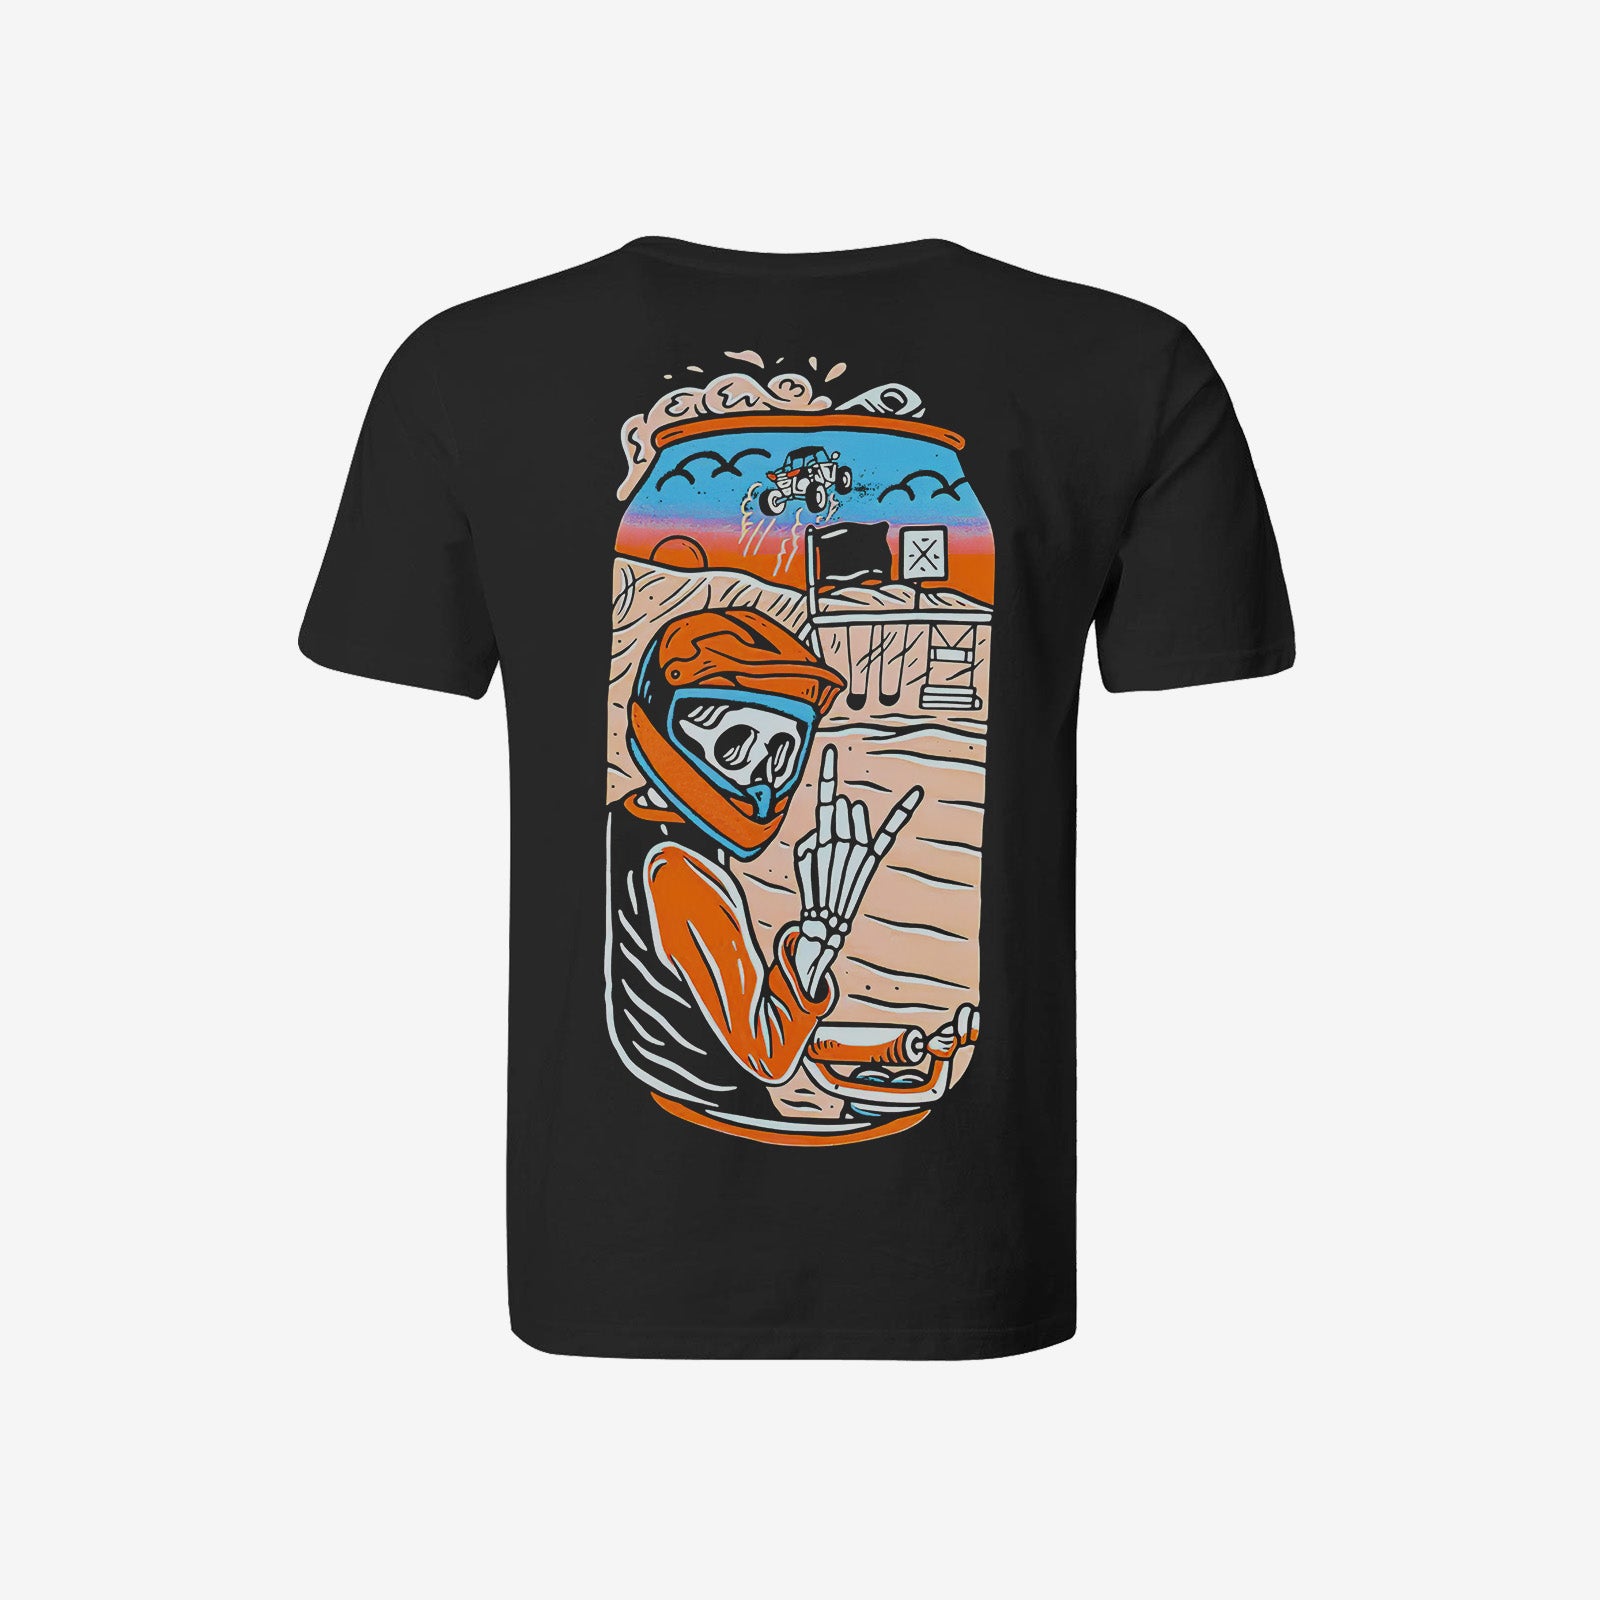 Uprandy Cool Cycling Skull Print T-Shirt - chicyea